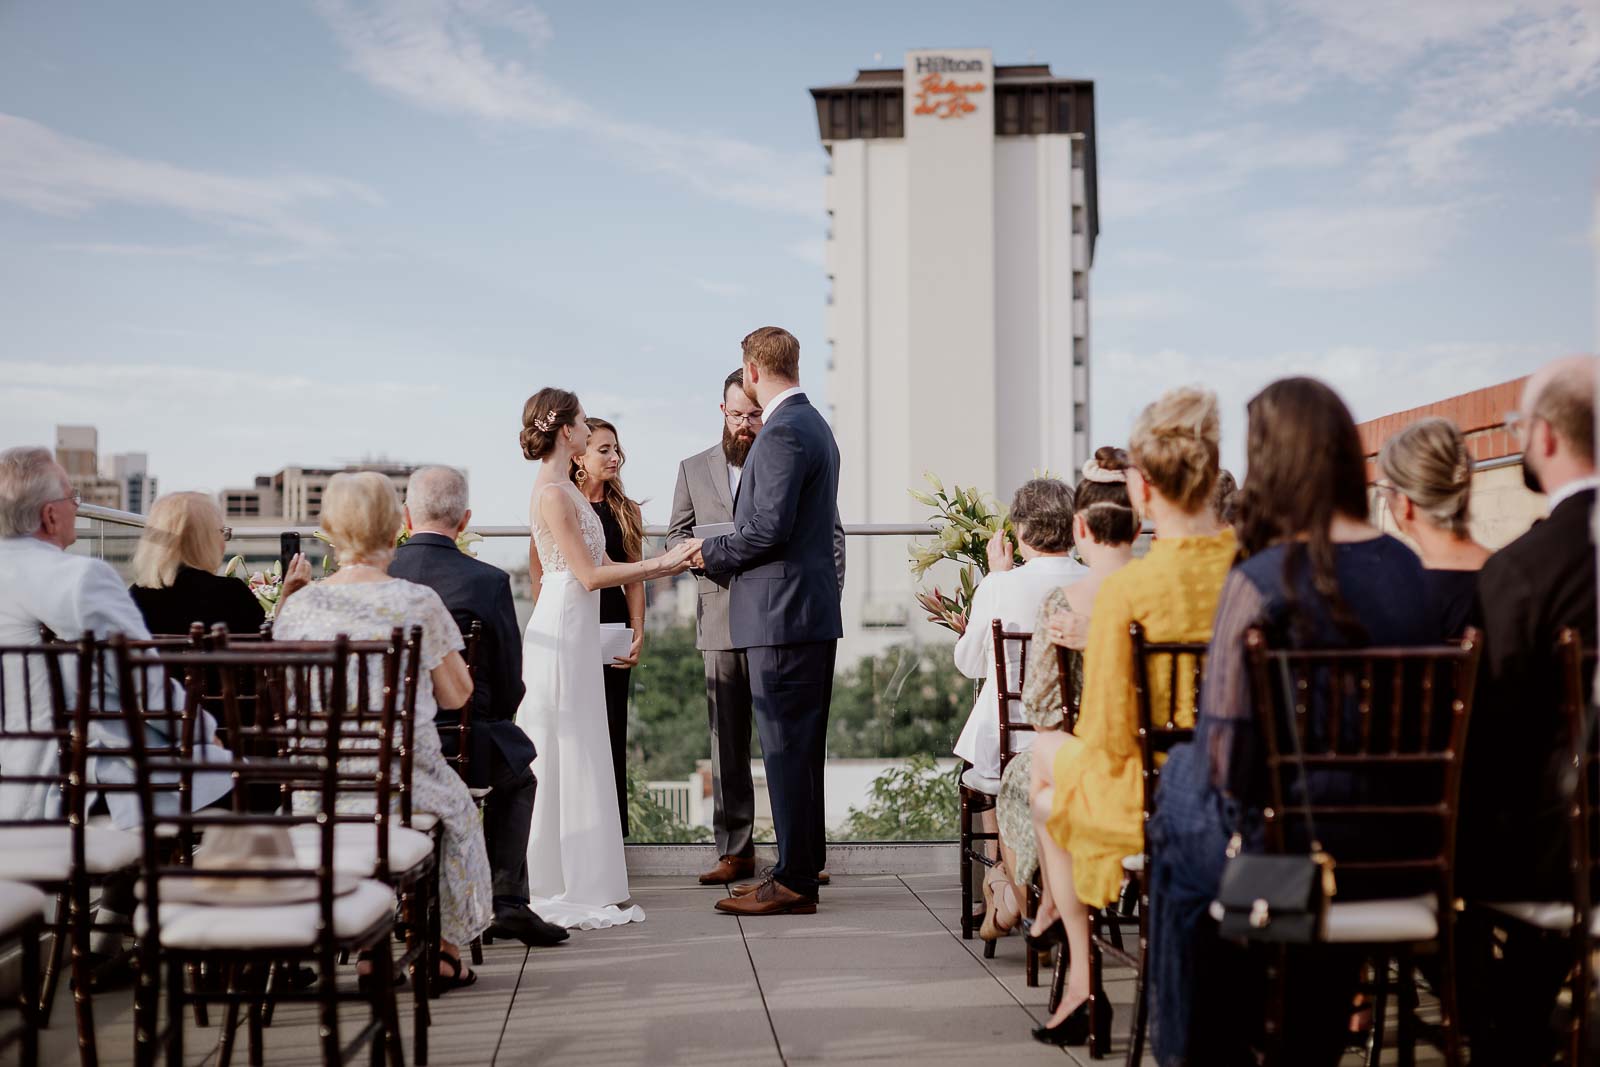 018 The Fairmount Hotel Rooftop Oyster Bar Wedding Reception Leica photographer Philip Thomas Photography